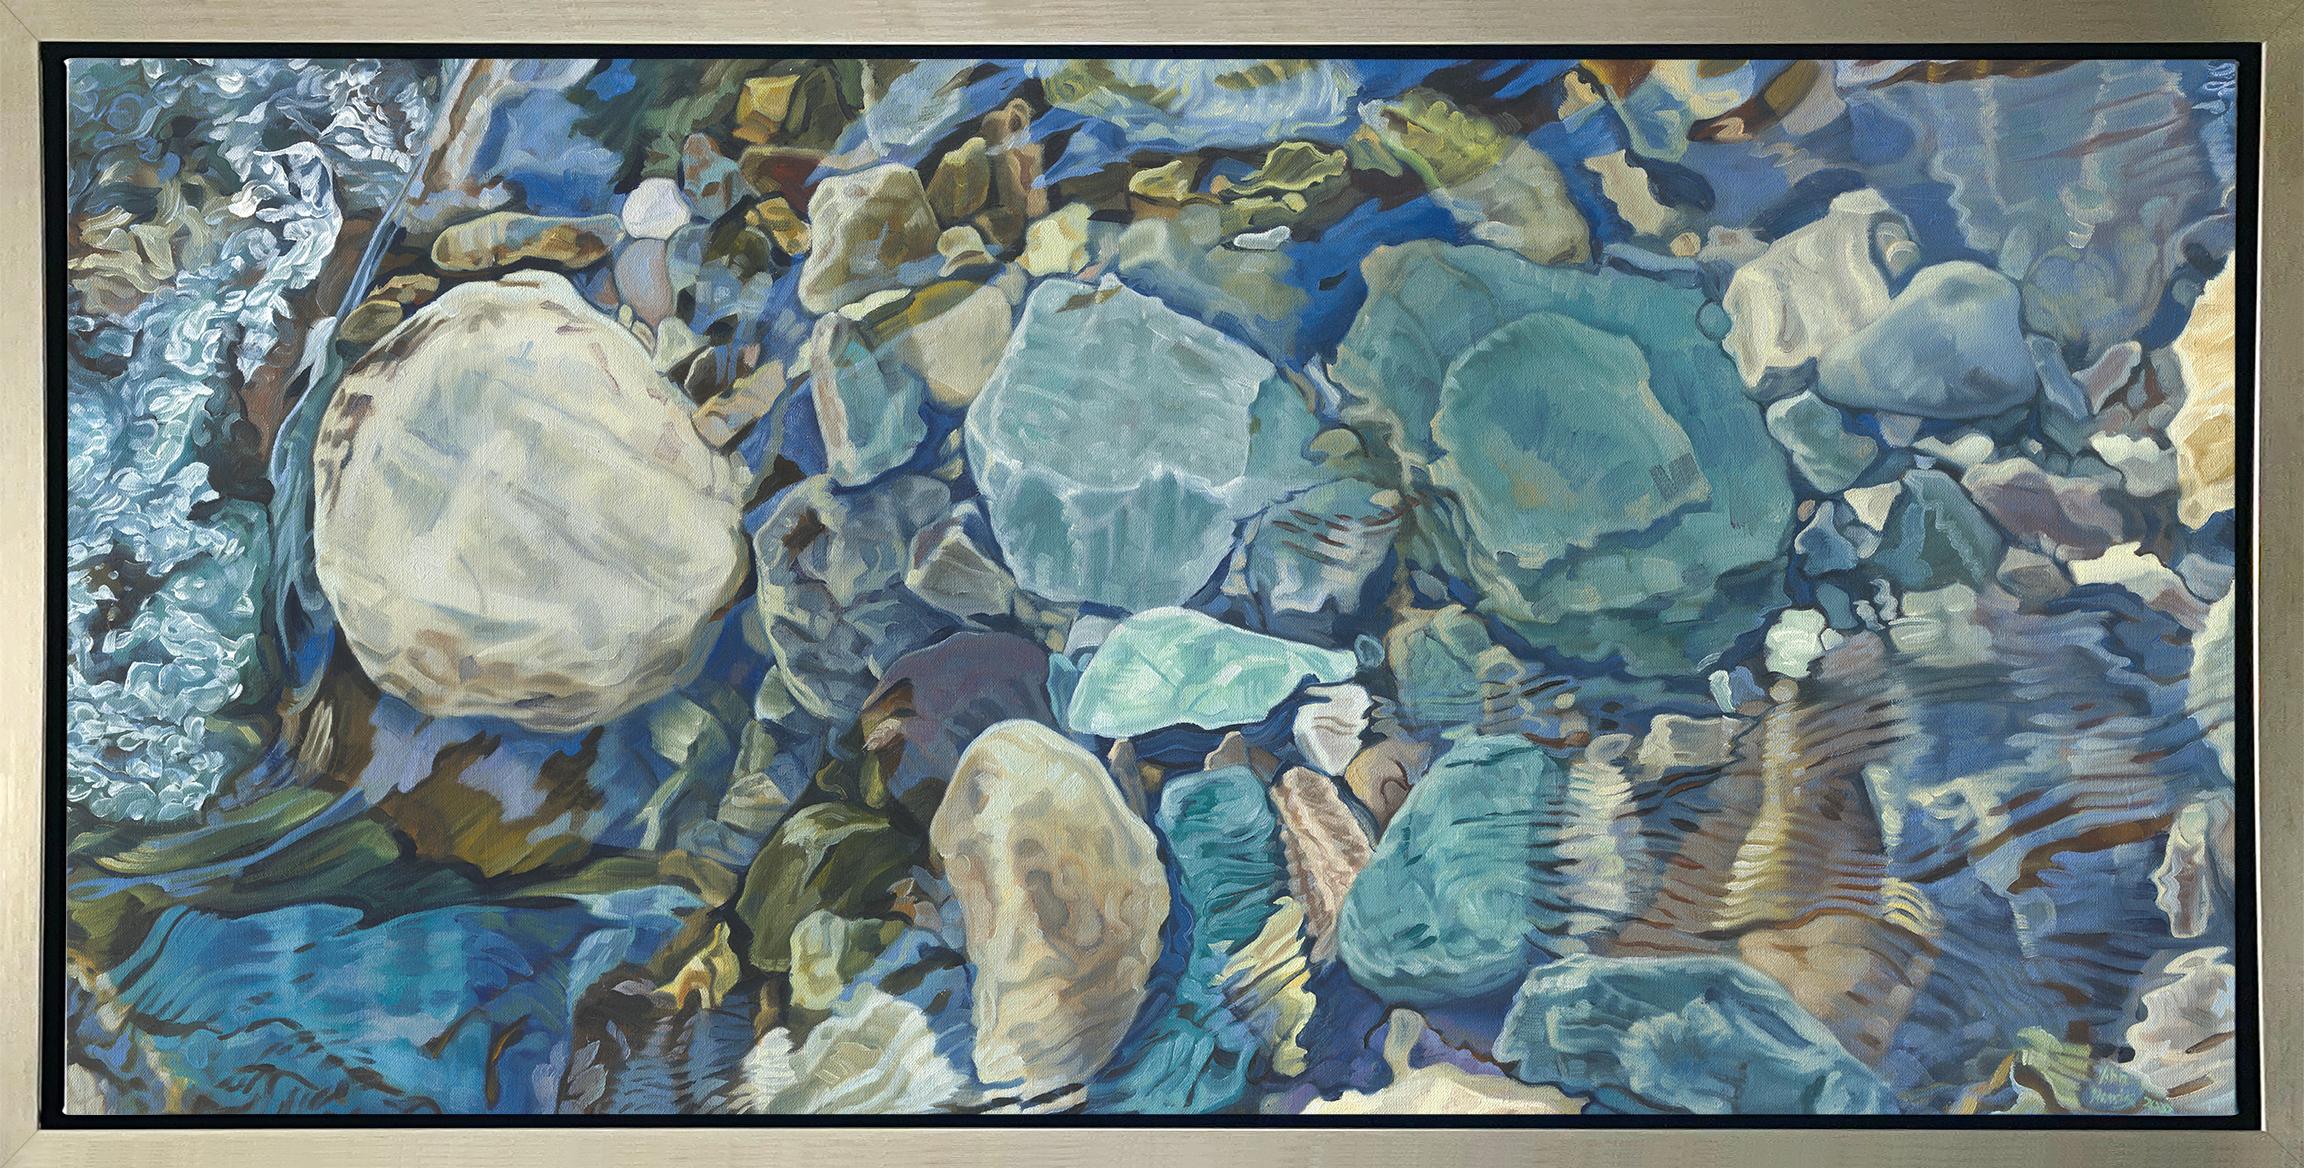 John Harris (painter) Landscape Print - "Rocky River 8, " Framed Limited Edition Giclee Print, 16" x 32"